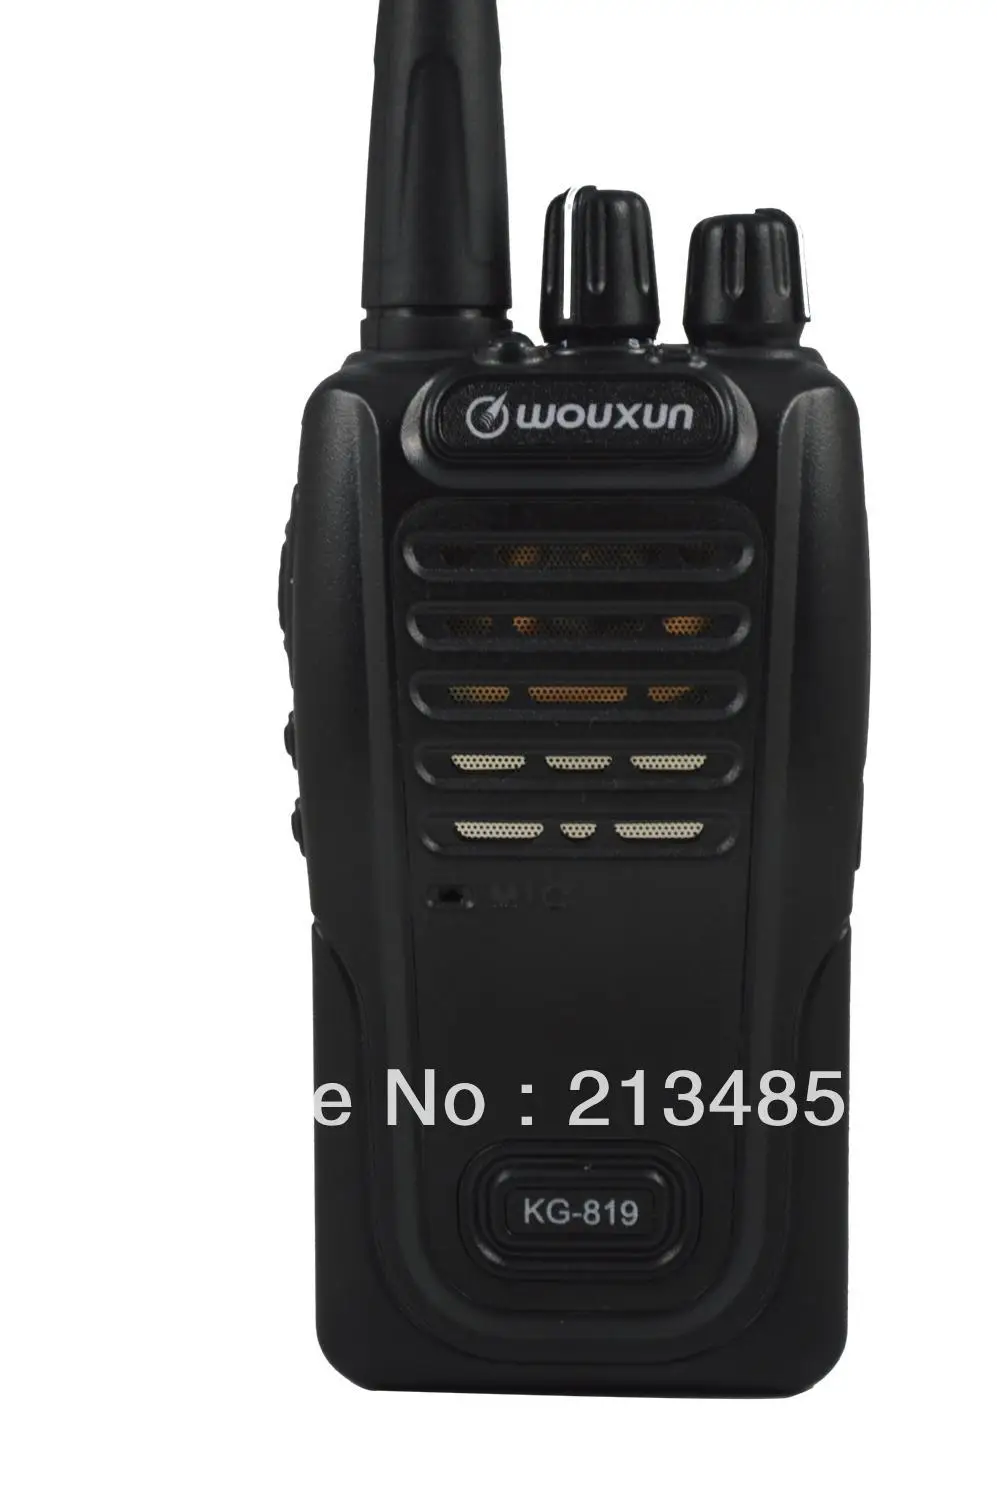 WOUXUN KG-819 VHF 136-174MHz 4W 16CH Two-way Radio